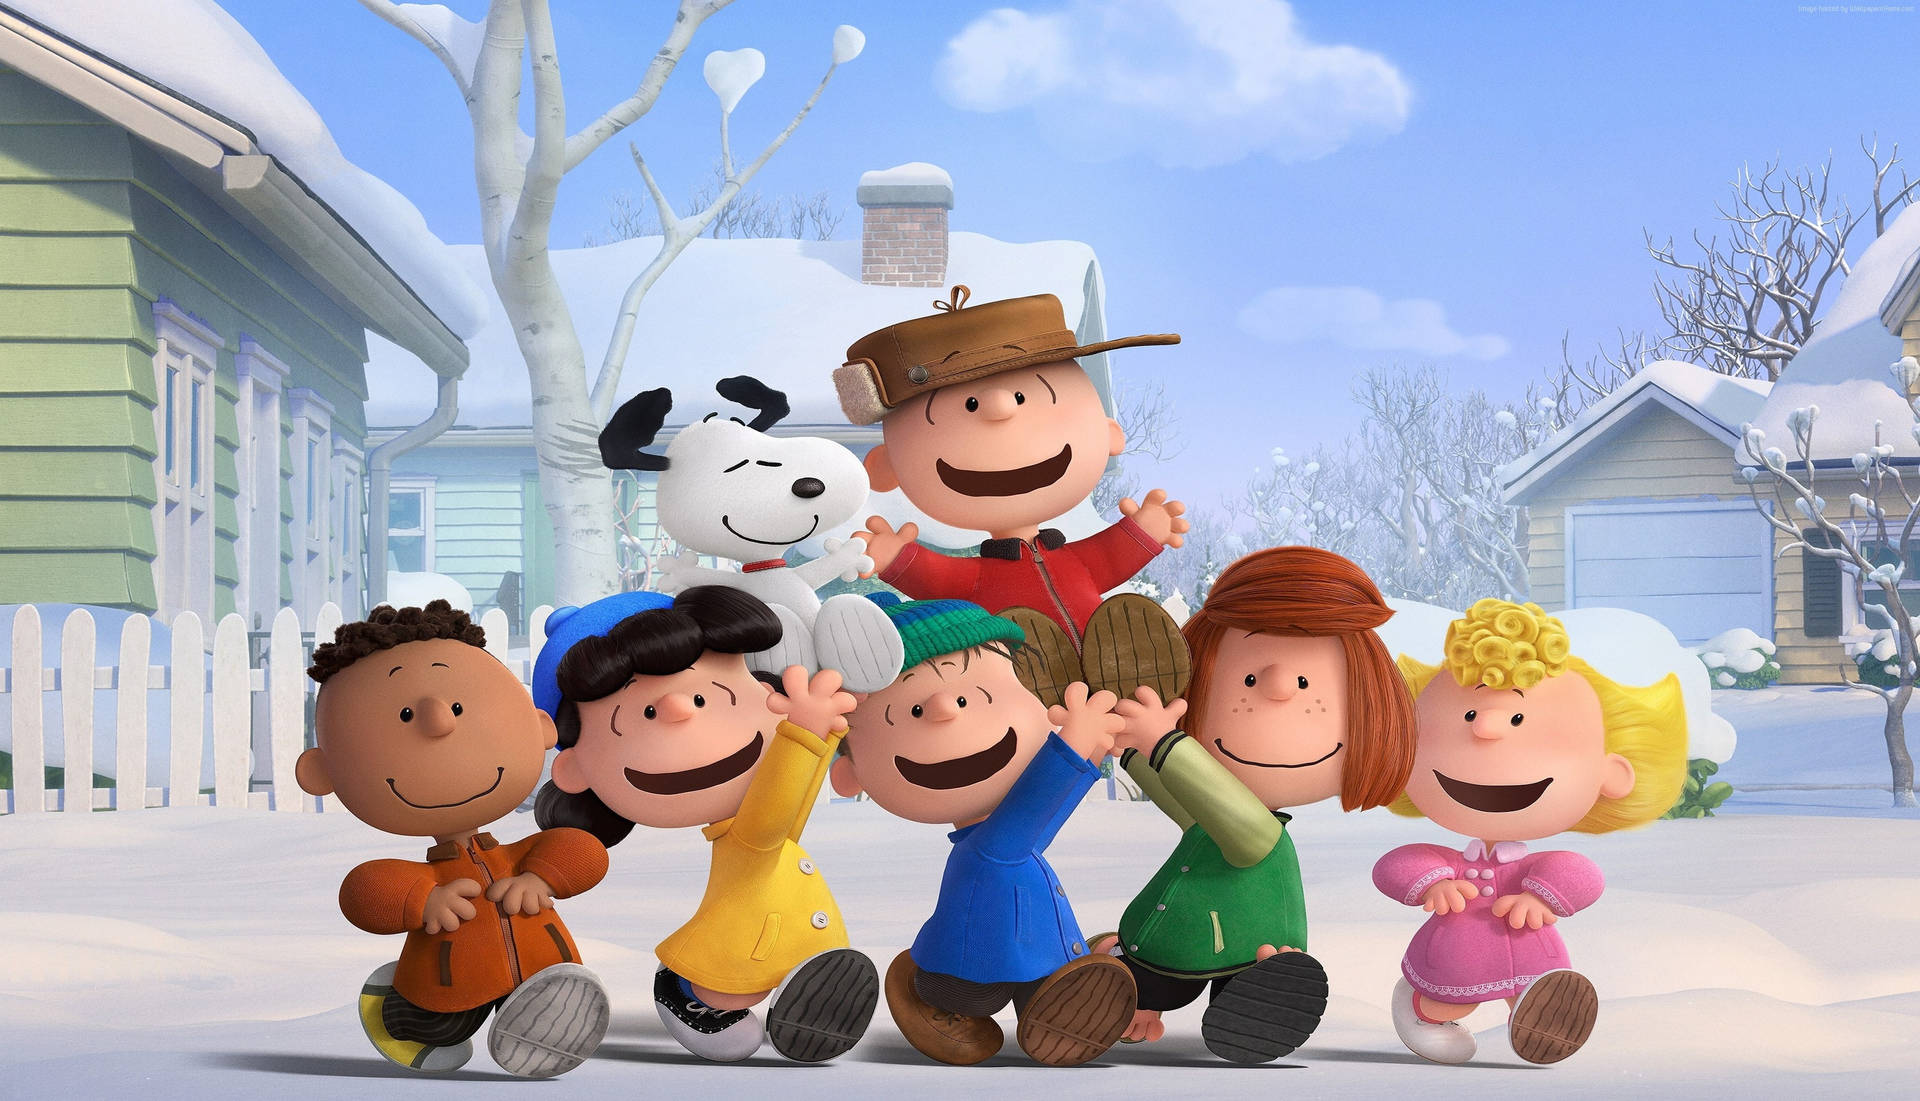 Personagensdo Snoopy No Inverno. Papel de Parede